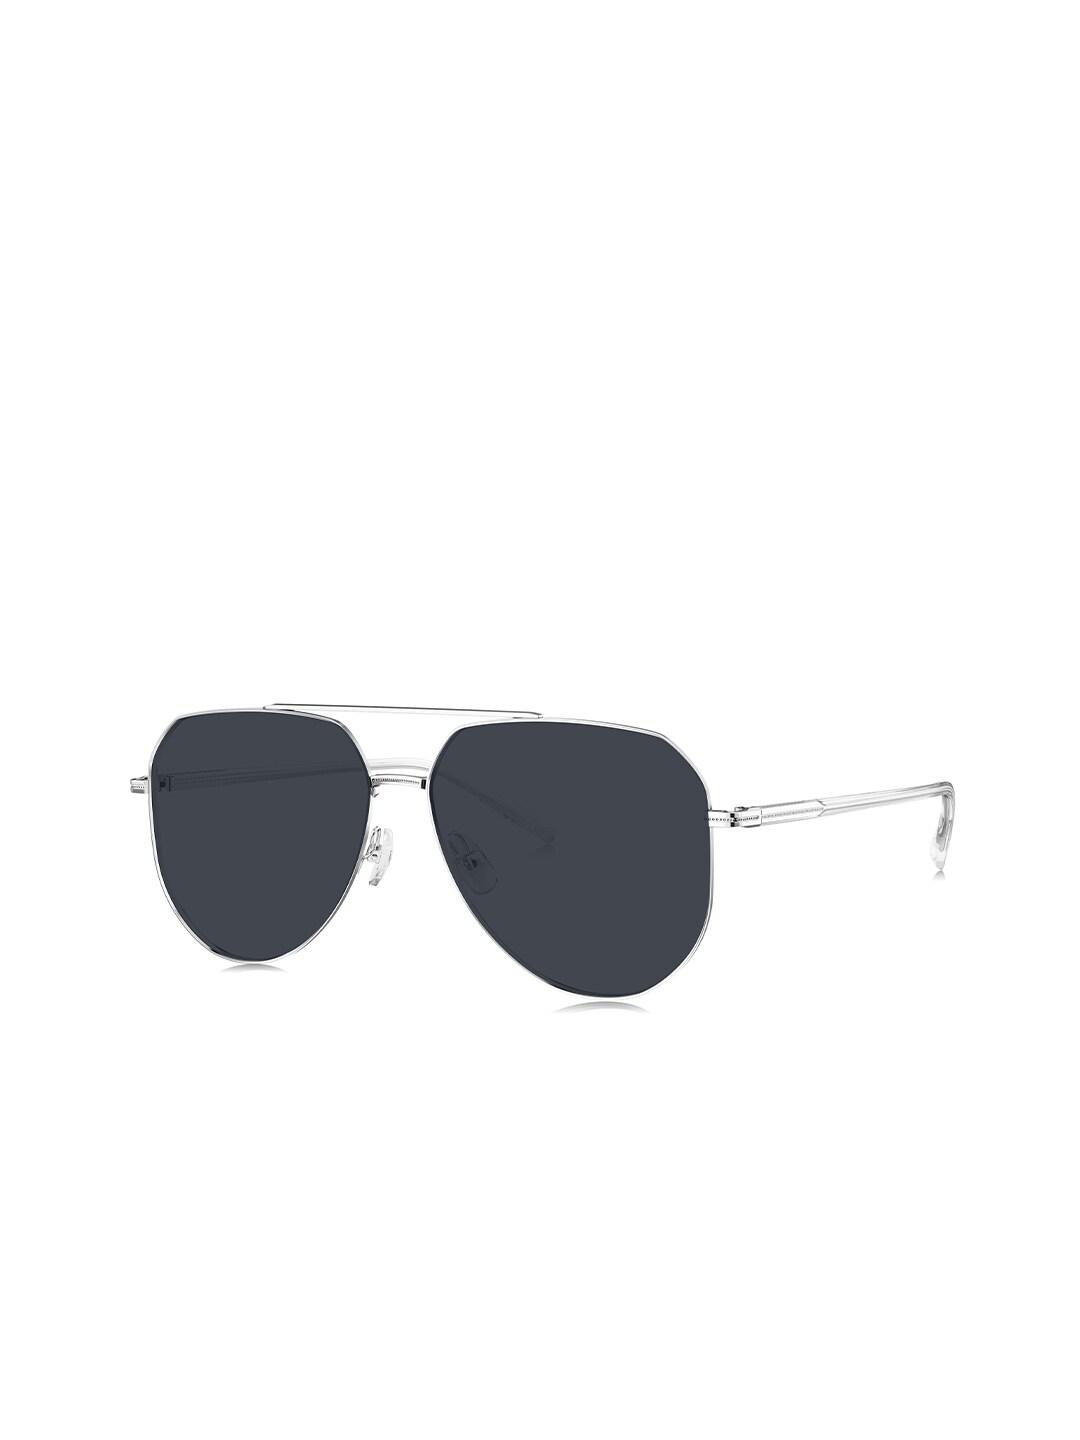 BOLON EYEWEAR Men Blue Lens & Silver-Toned Aviator Sunglasses with Polarised Lens